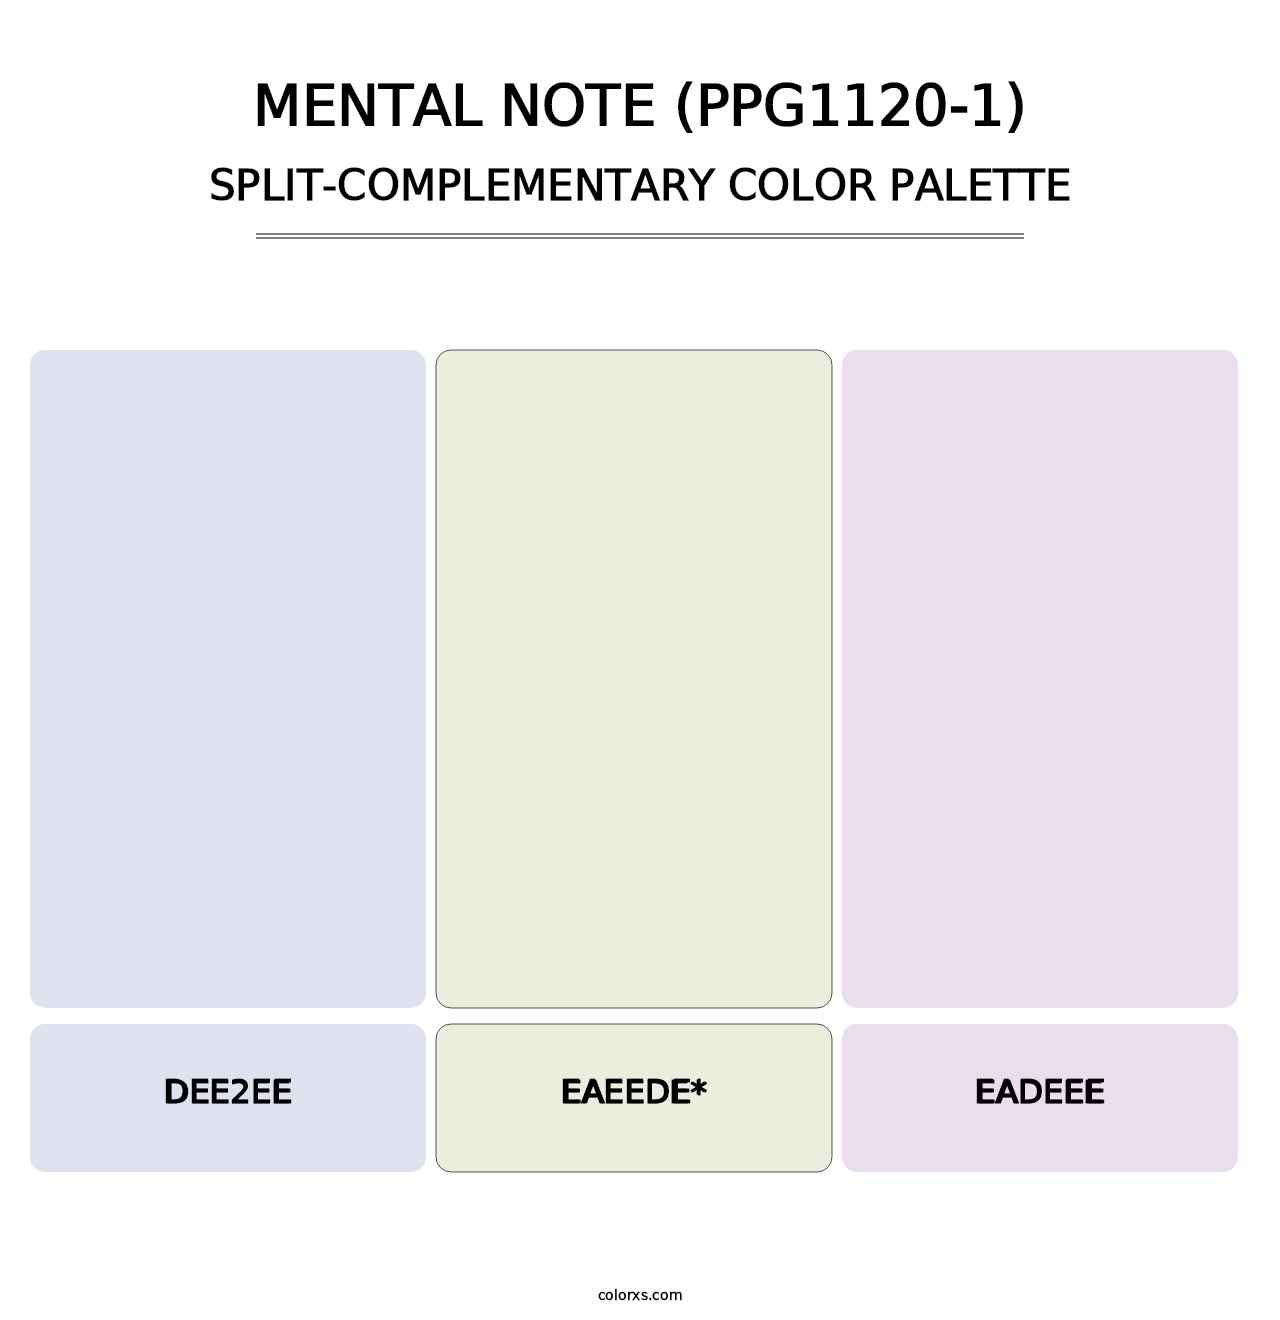 Mental Note (PPG1120-1) - Split-Complementary Color Palette